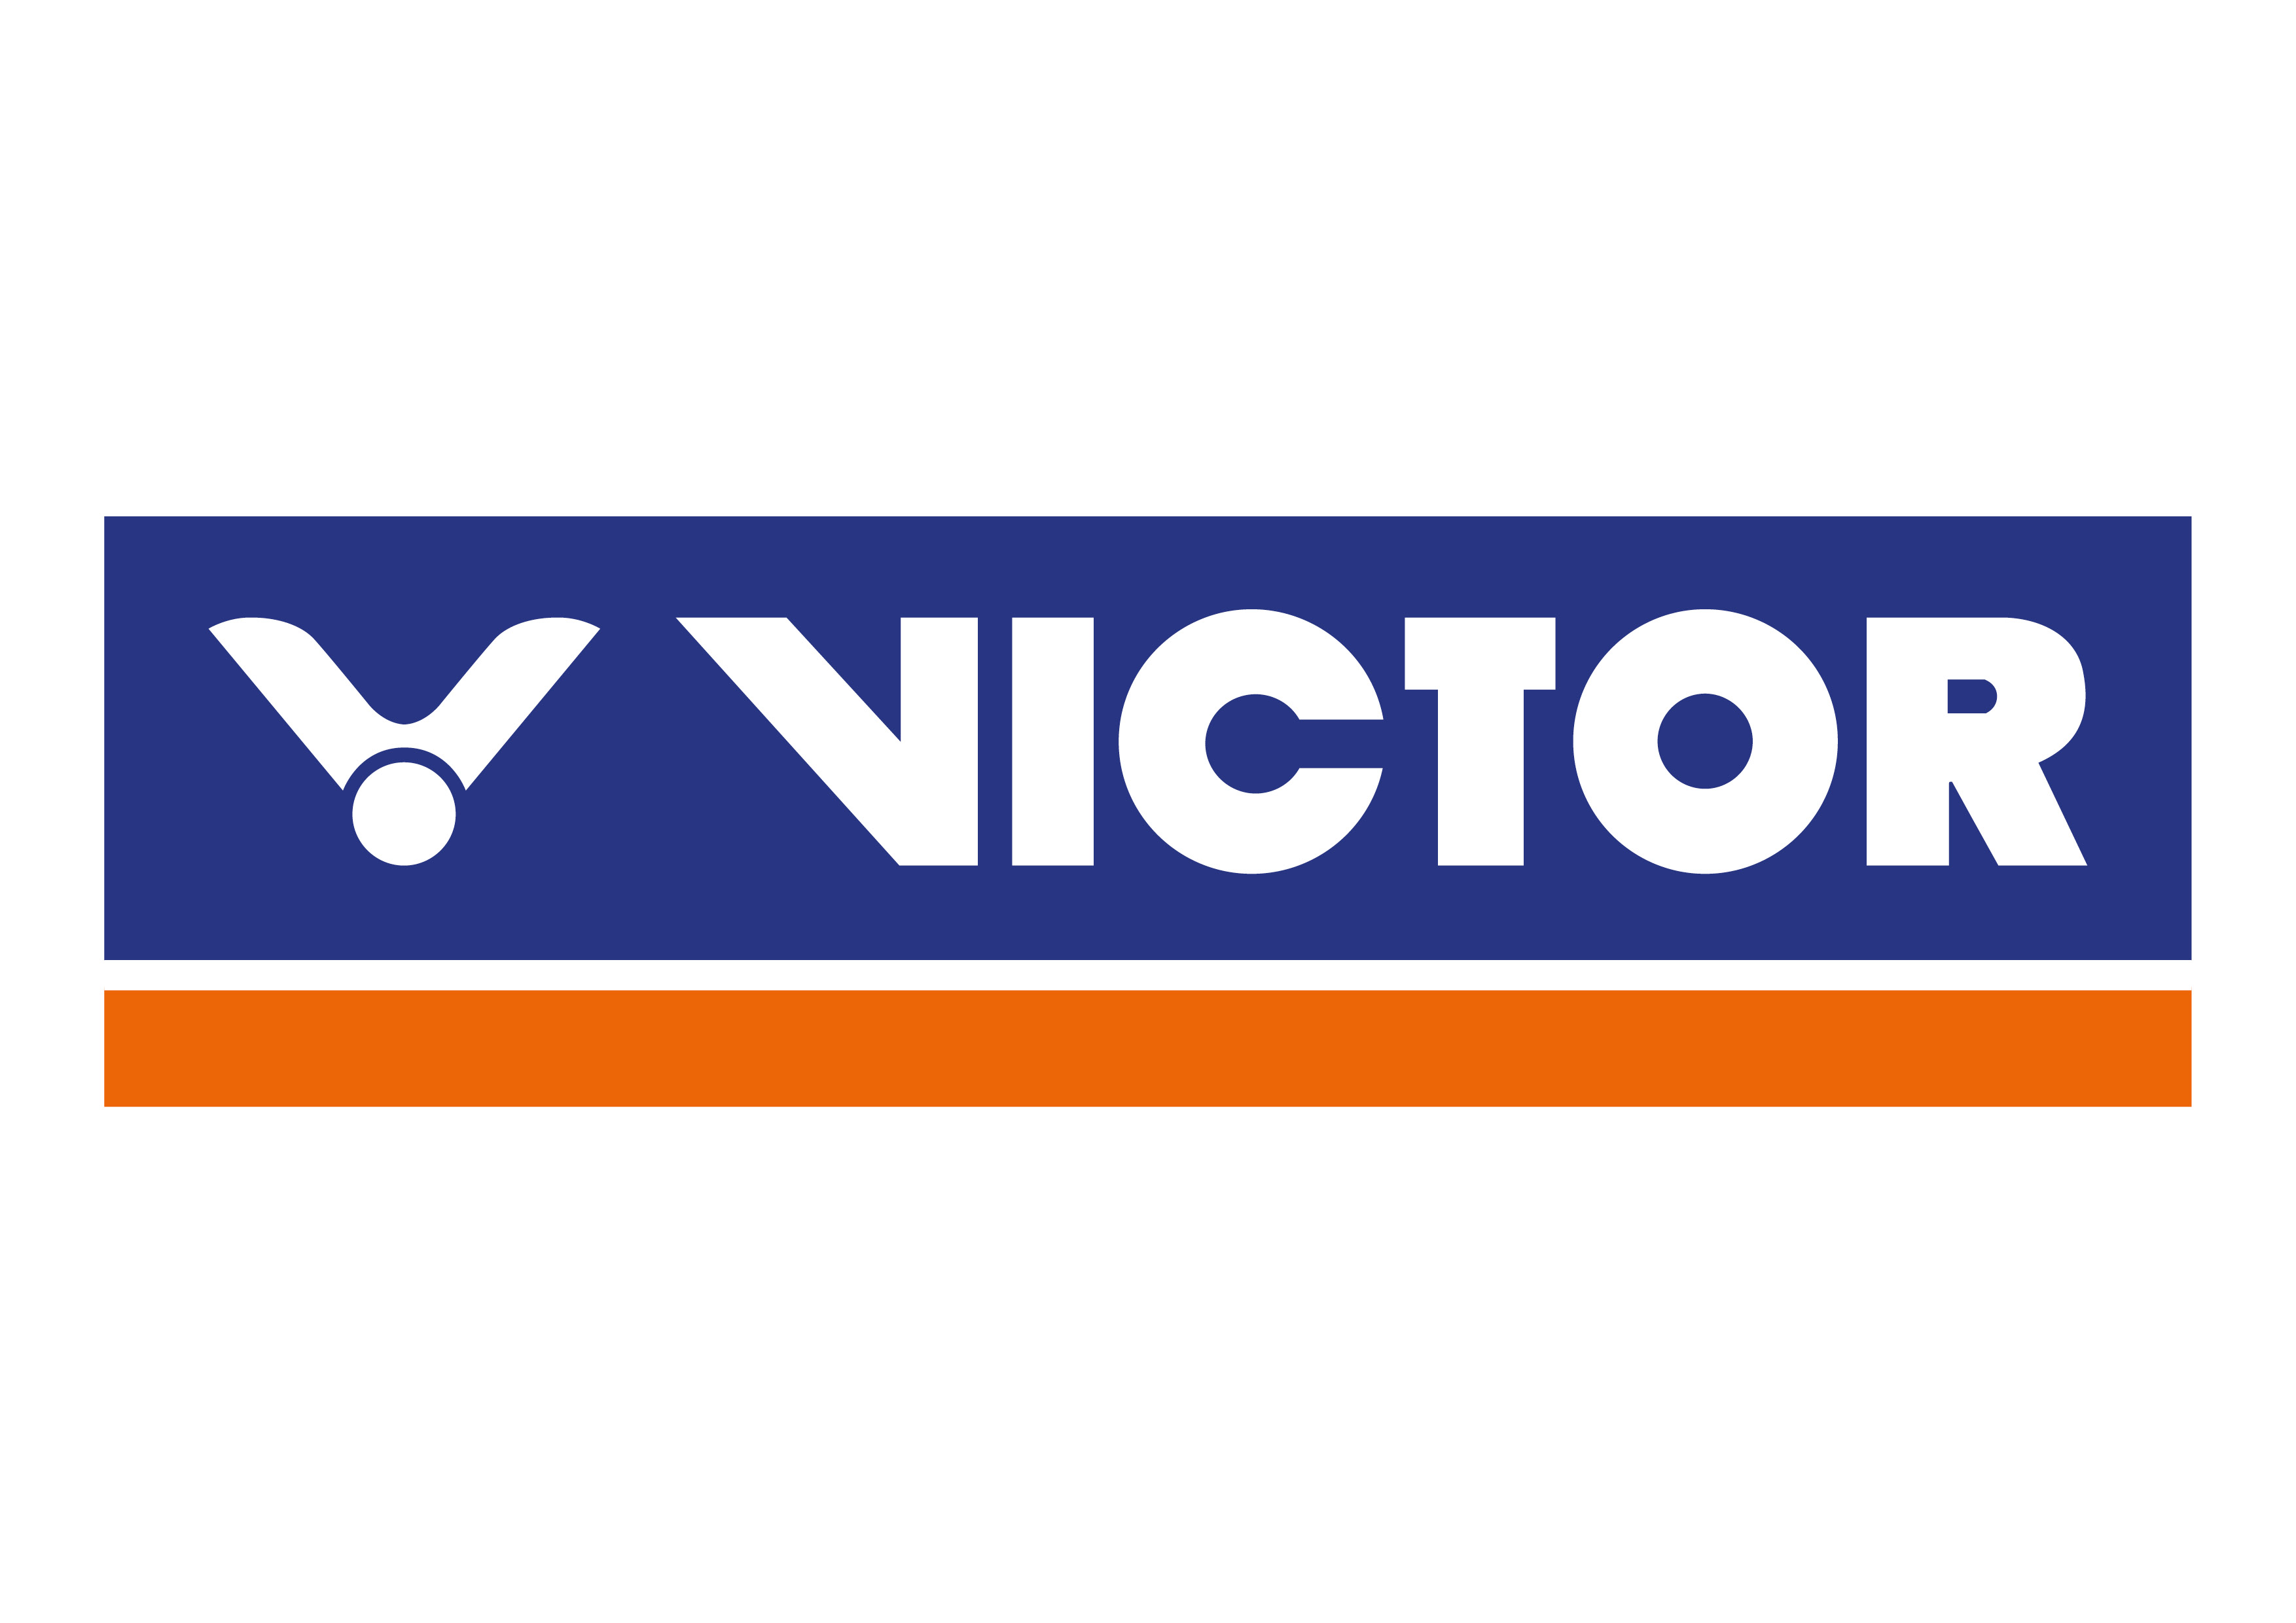 VICTOR Logo cmyk